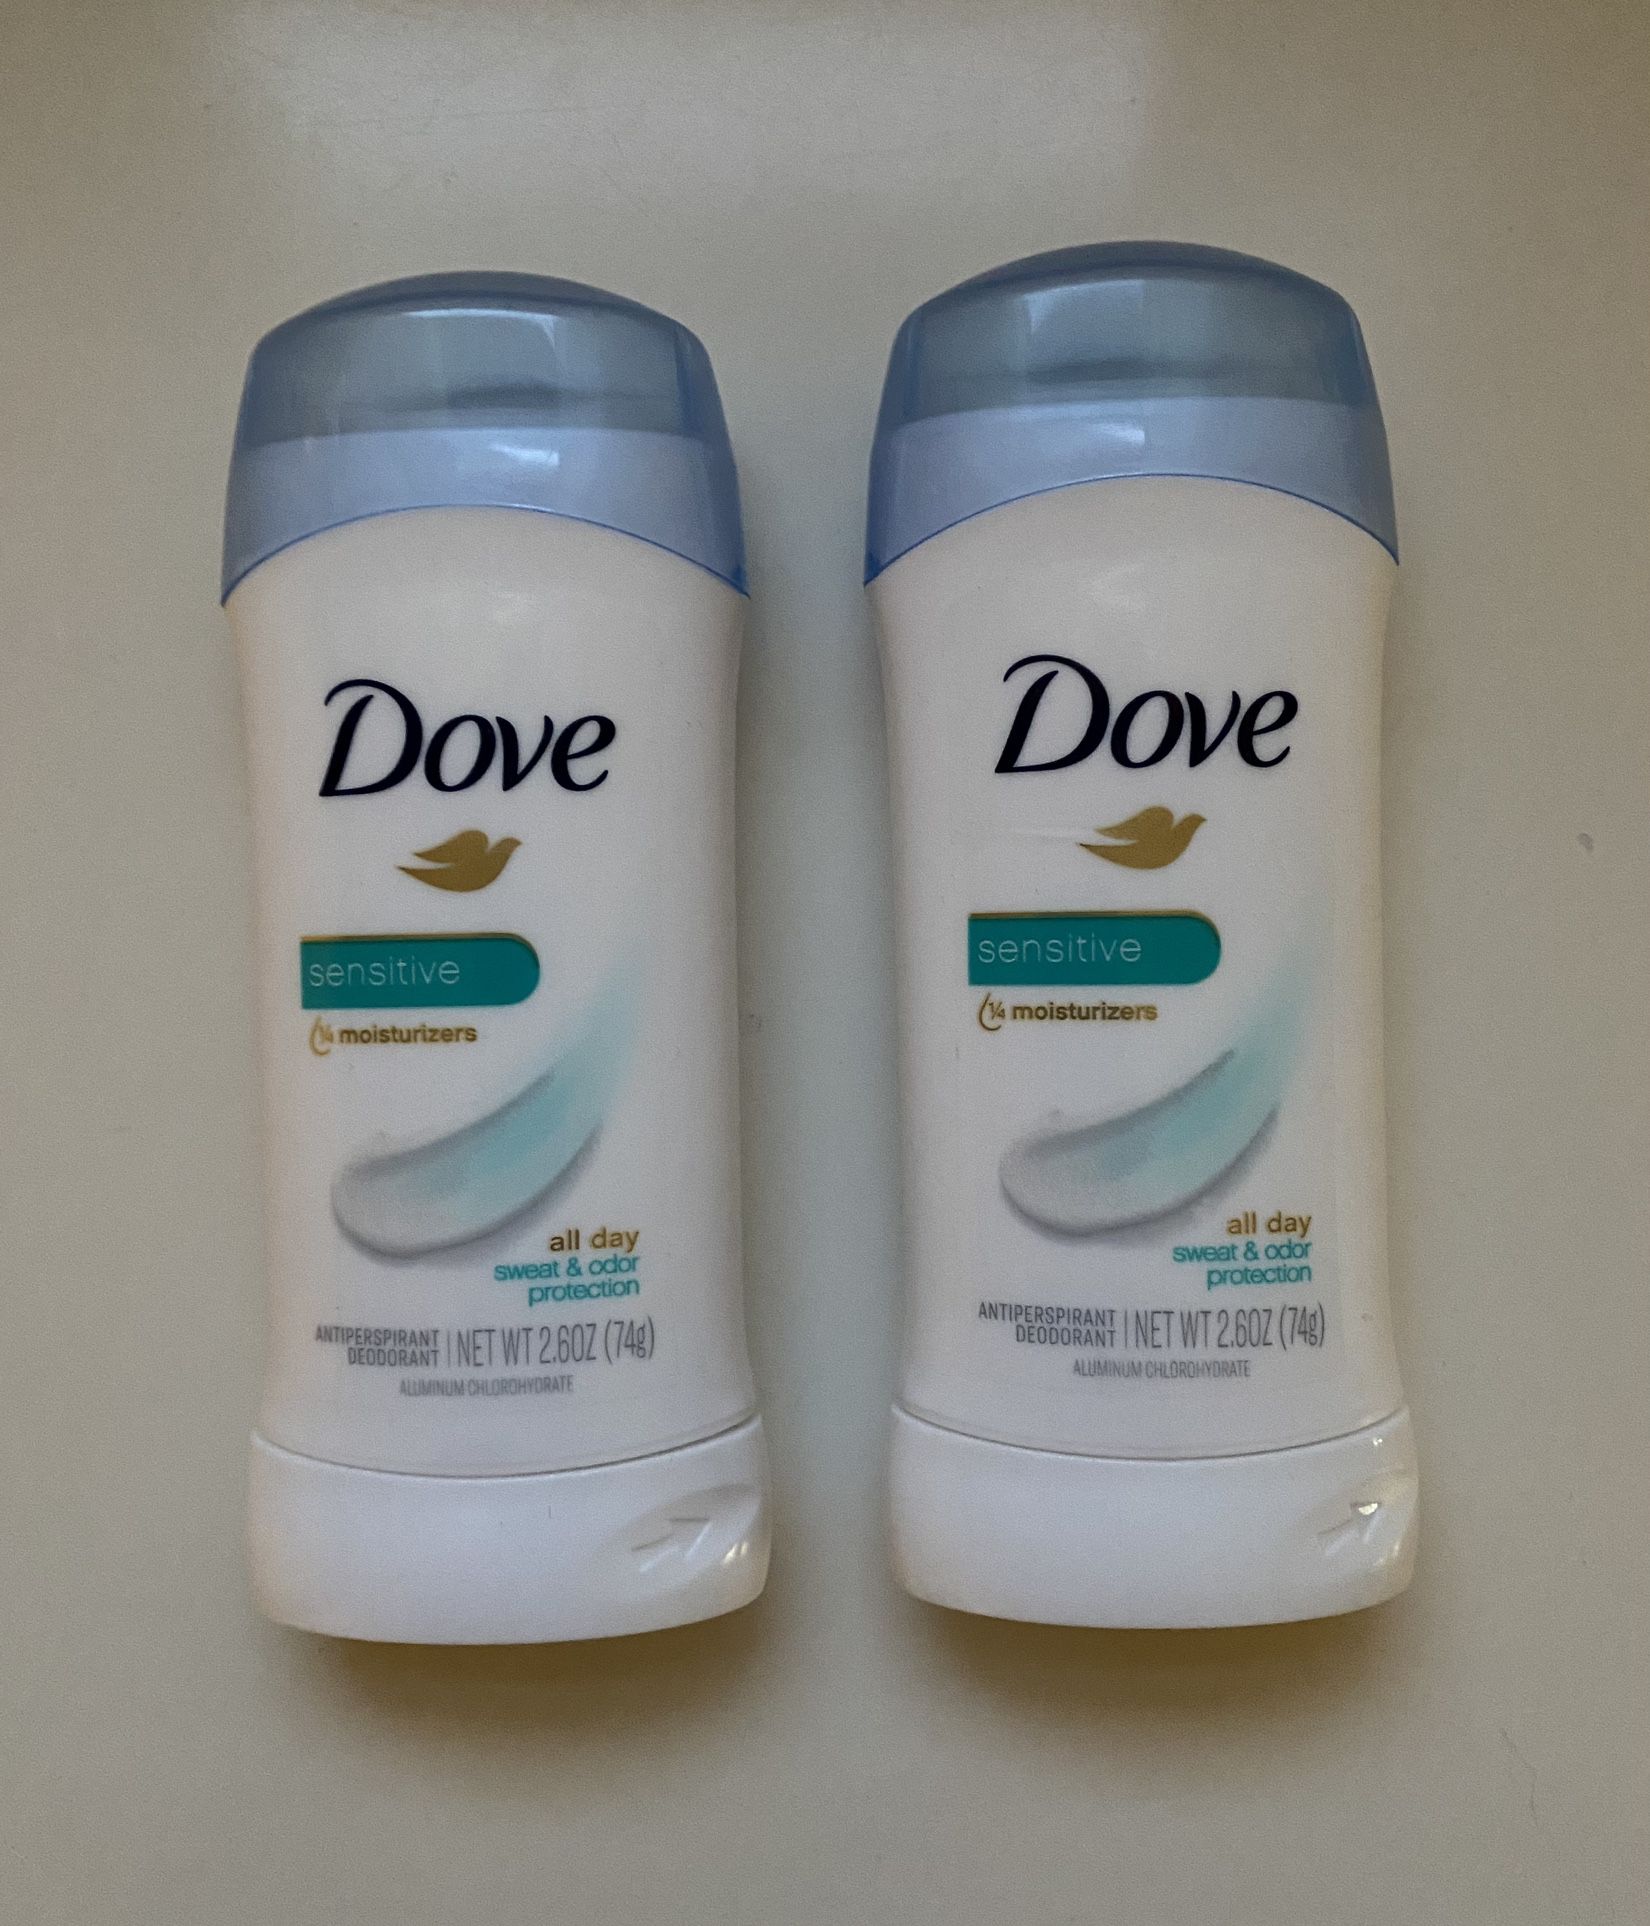 Dove sensitive deodorant 2 for $5